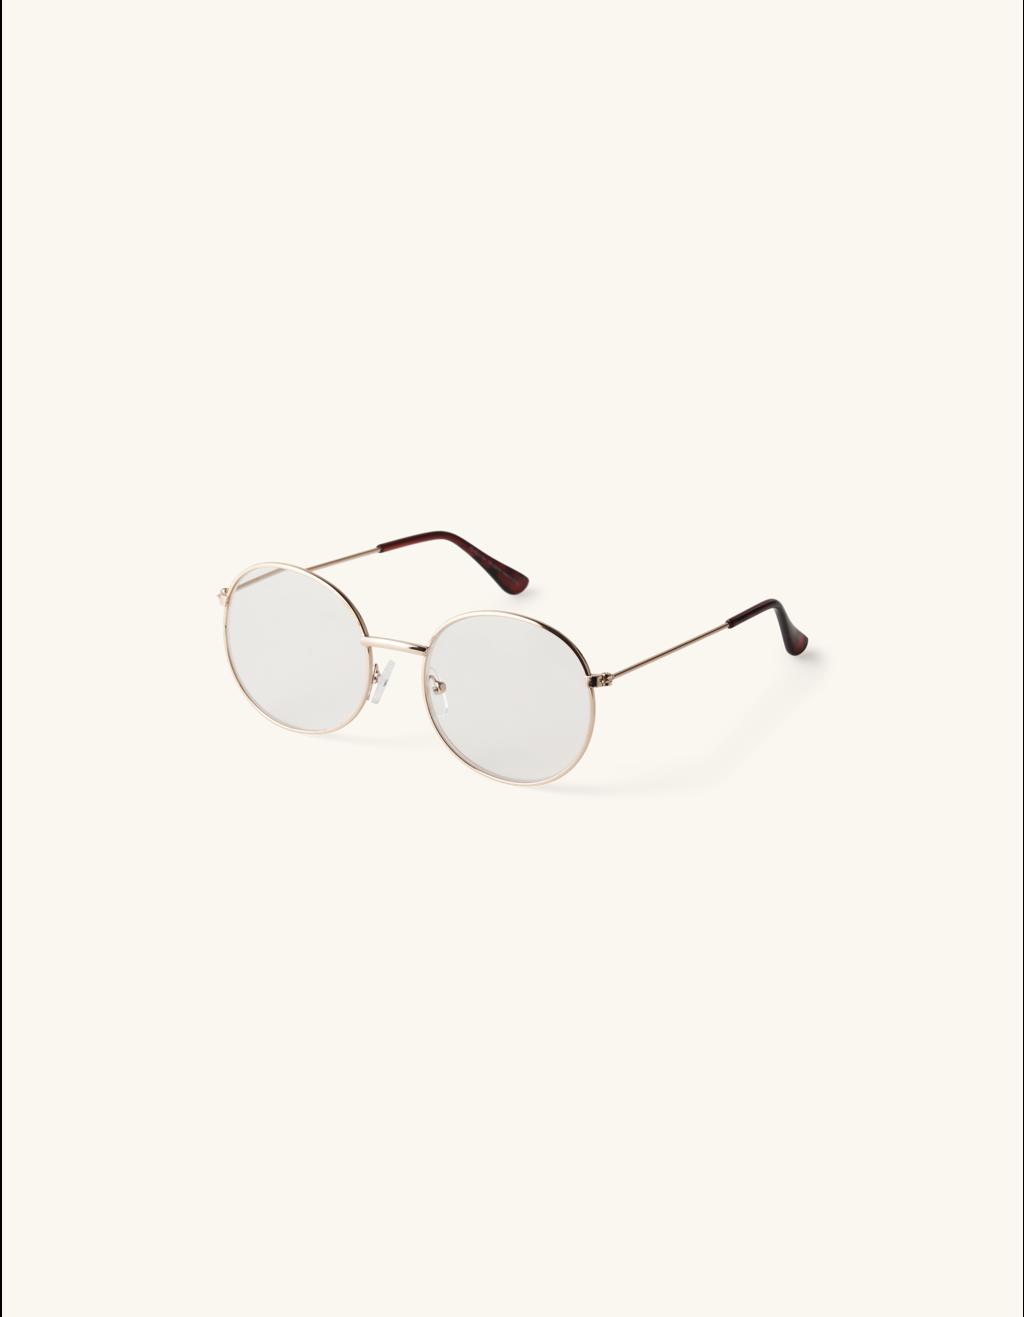 Læsebrille +3 14 cm | Søstrene Grene